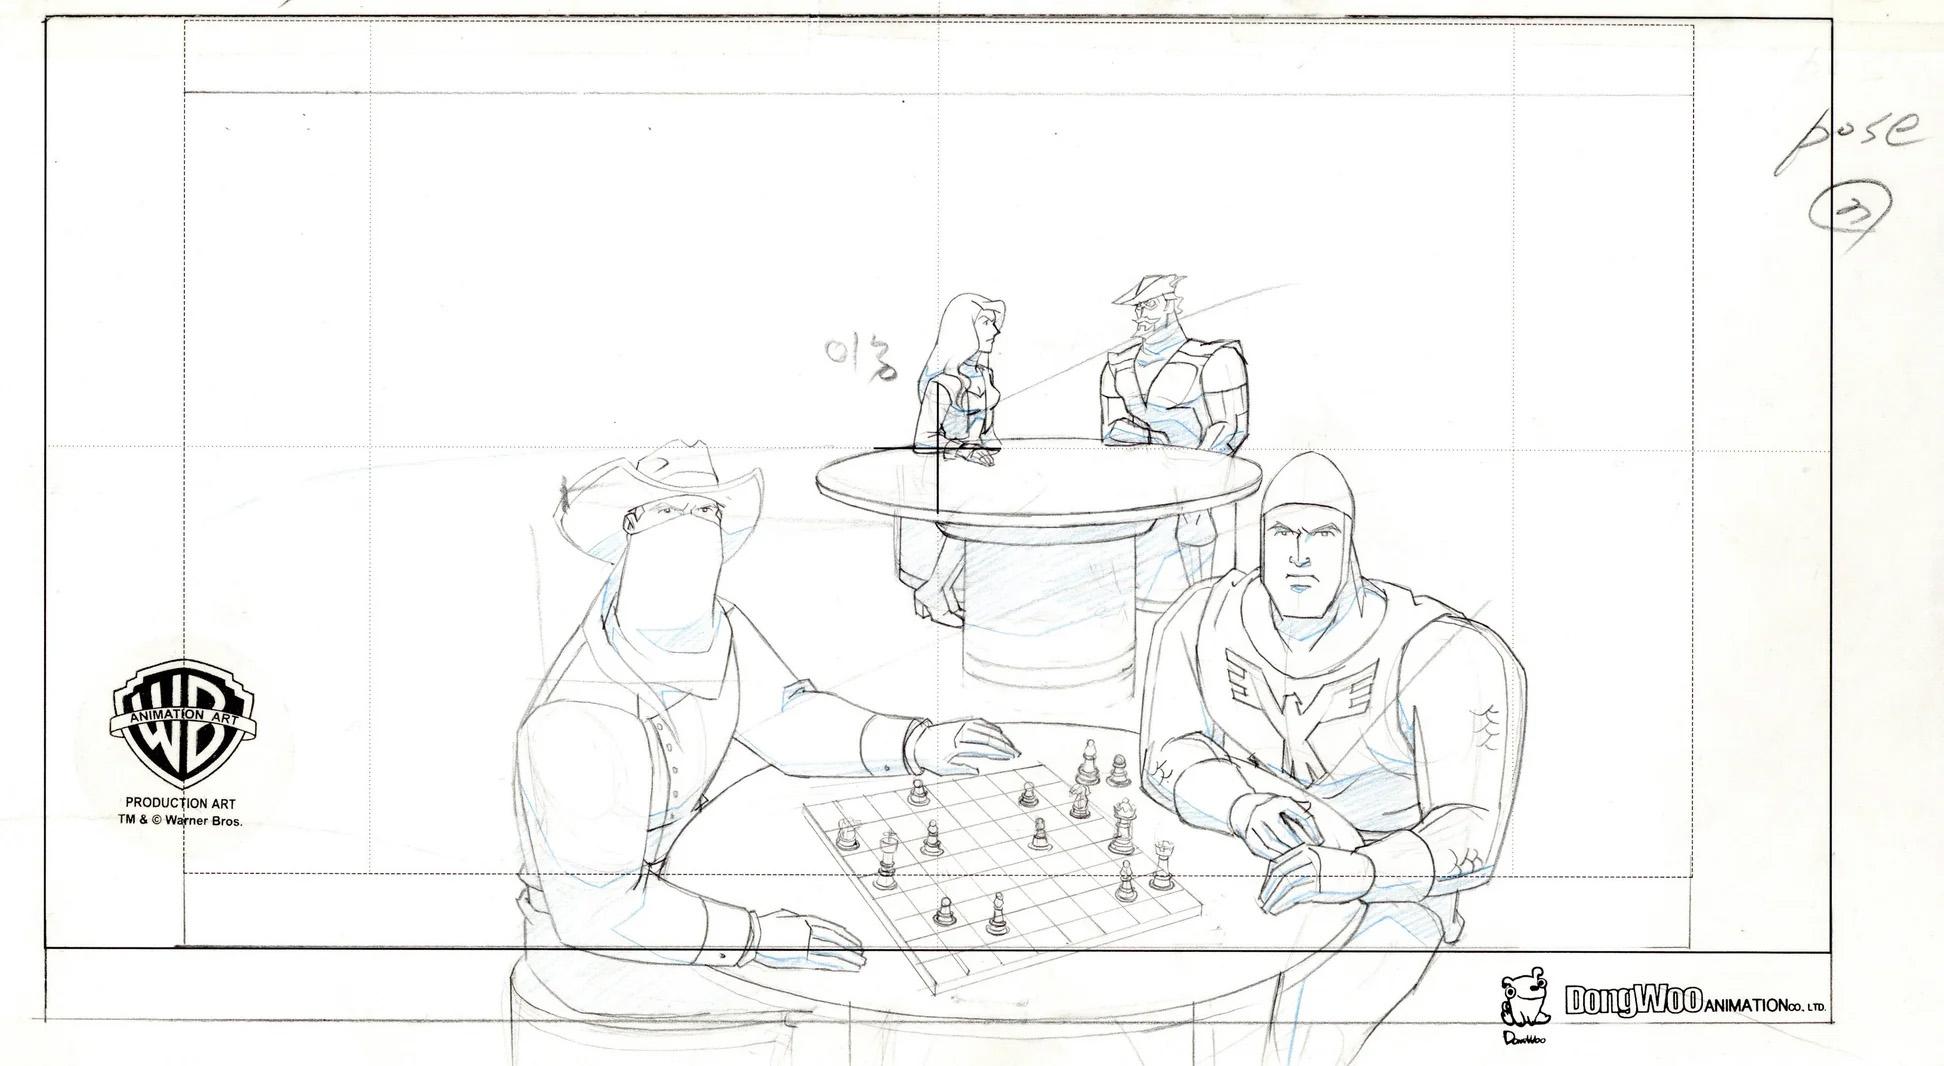 Justice League Original Production Drawing: Black Canary, Green Arrow, Vigilante - Art by DC Comics Studio Artists